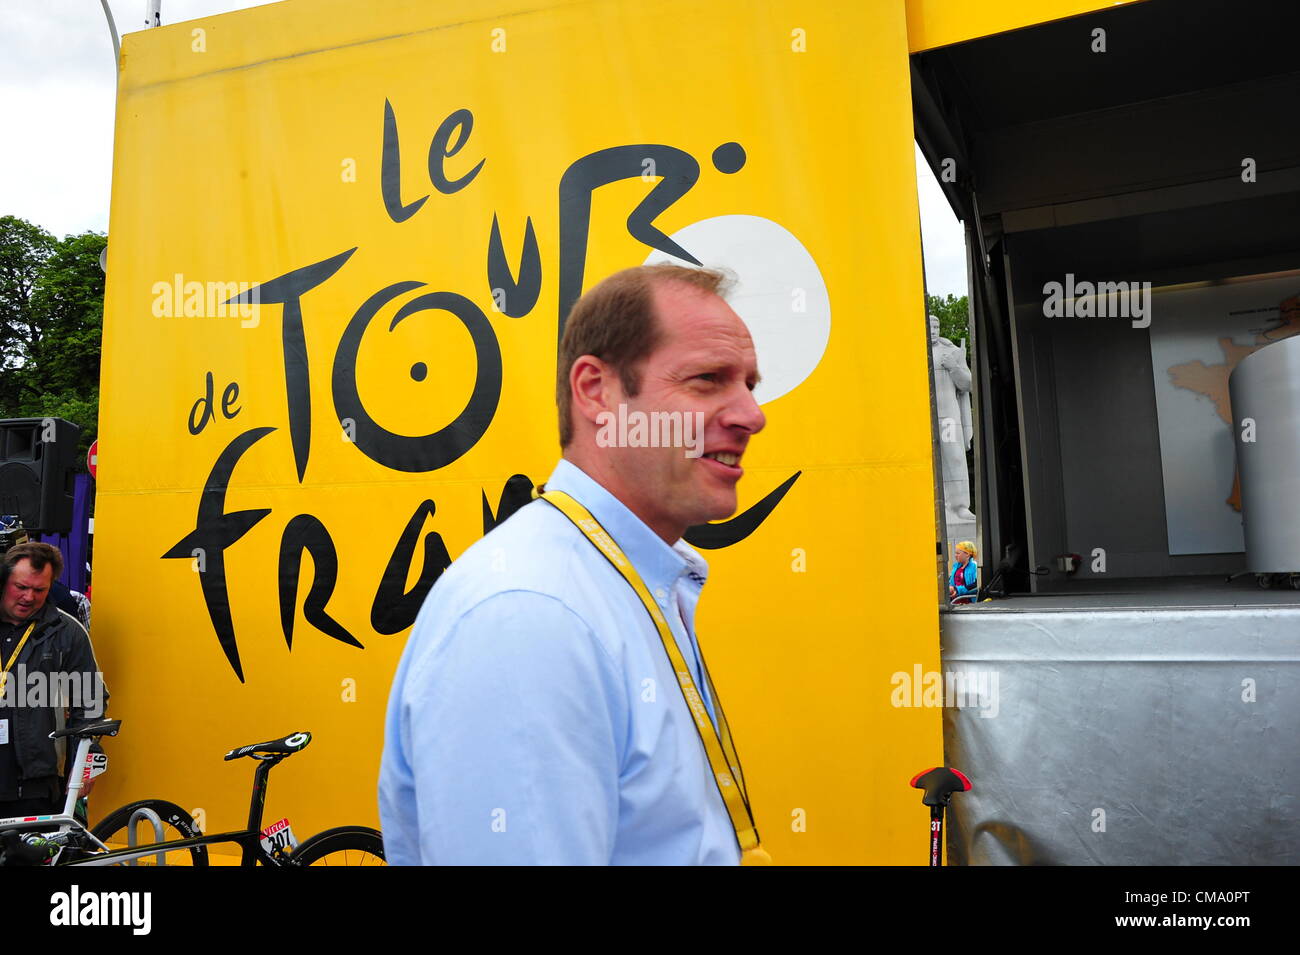 01.07.2012. Tour de France, Liega, Seraing. Stufe 1.  Prudhomme Christian, Liegi Stockfoto